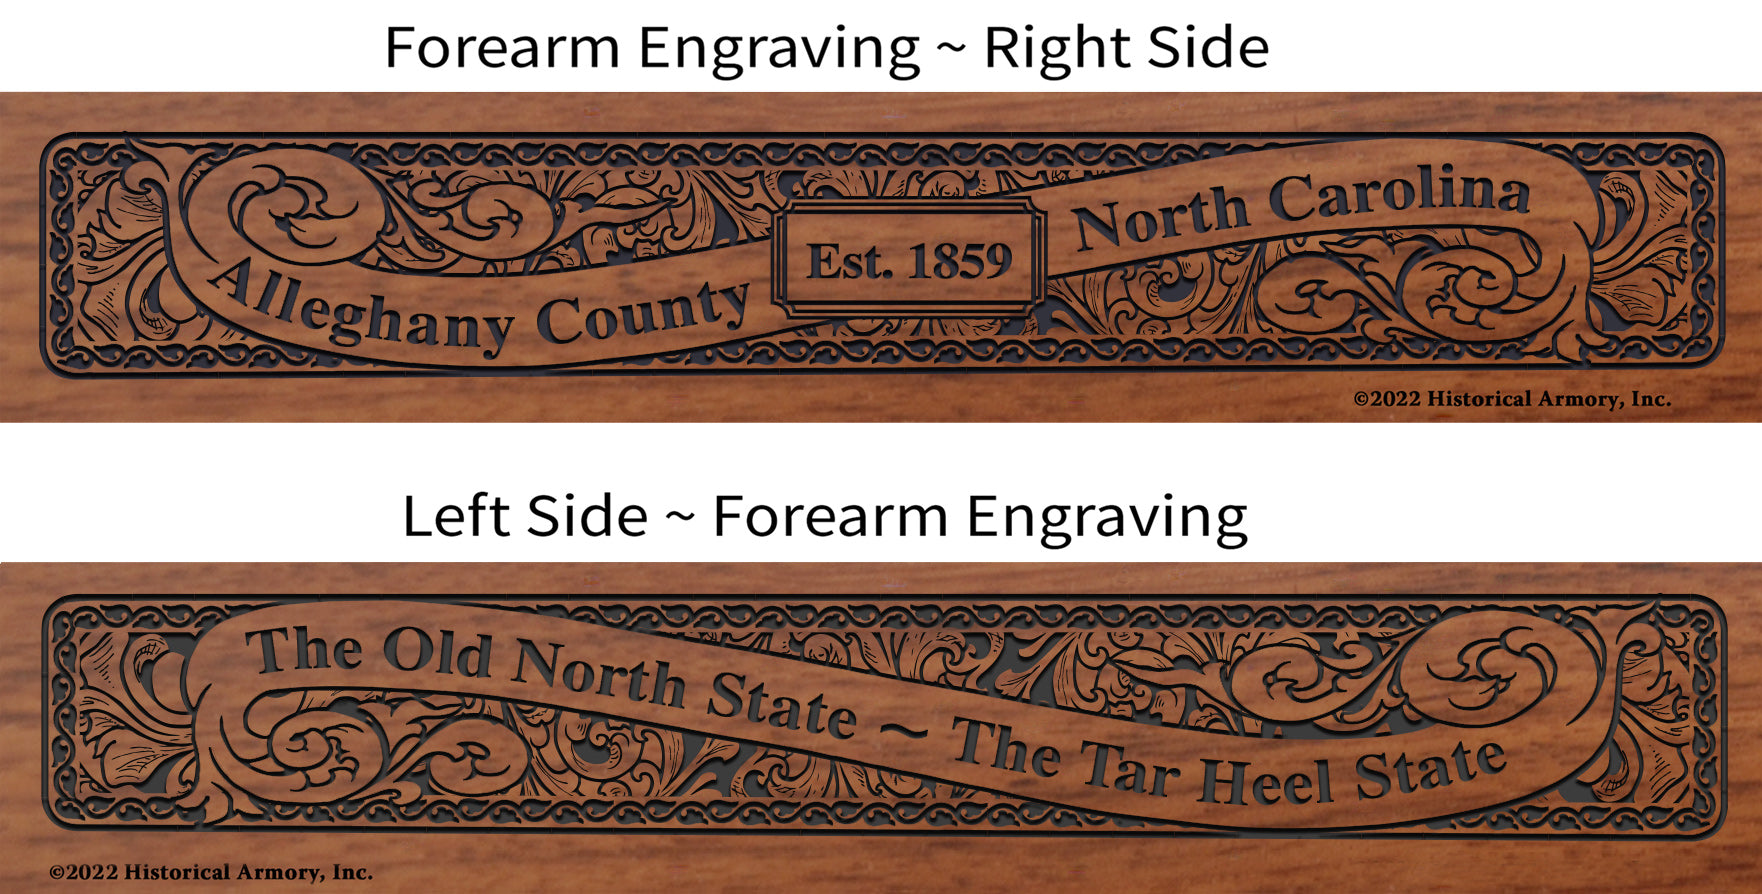 Alleghany County North Carolina Engraved Rifle Forearm